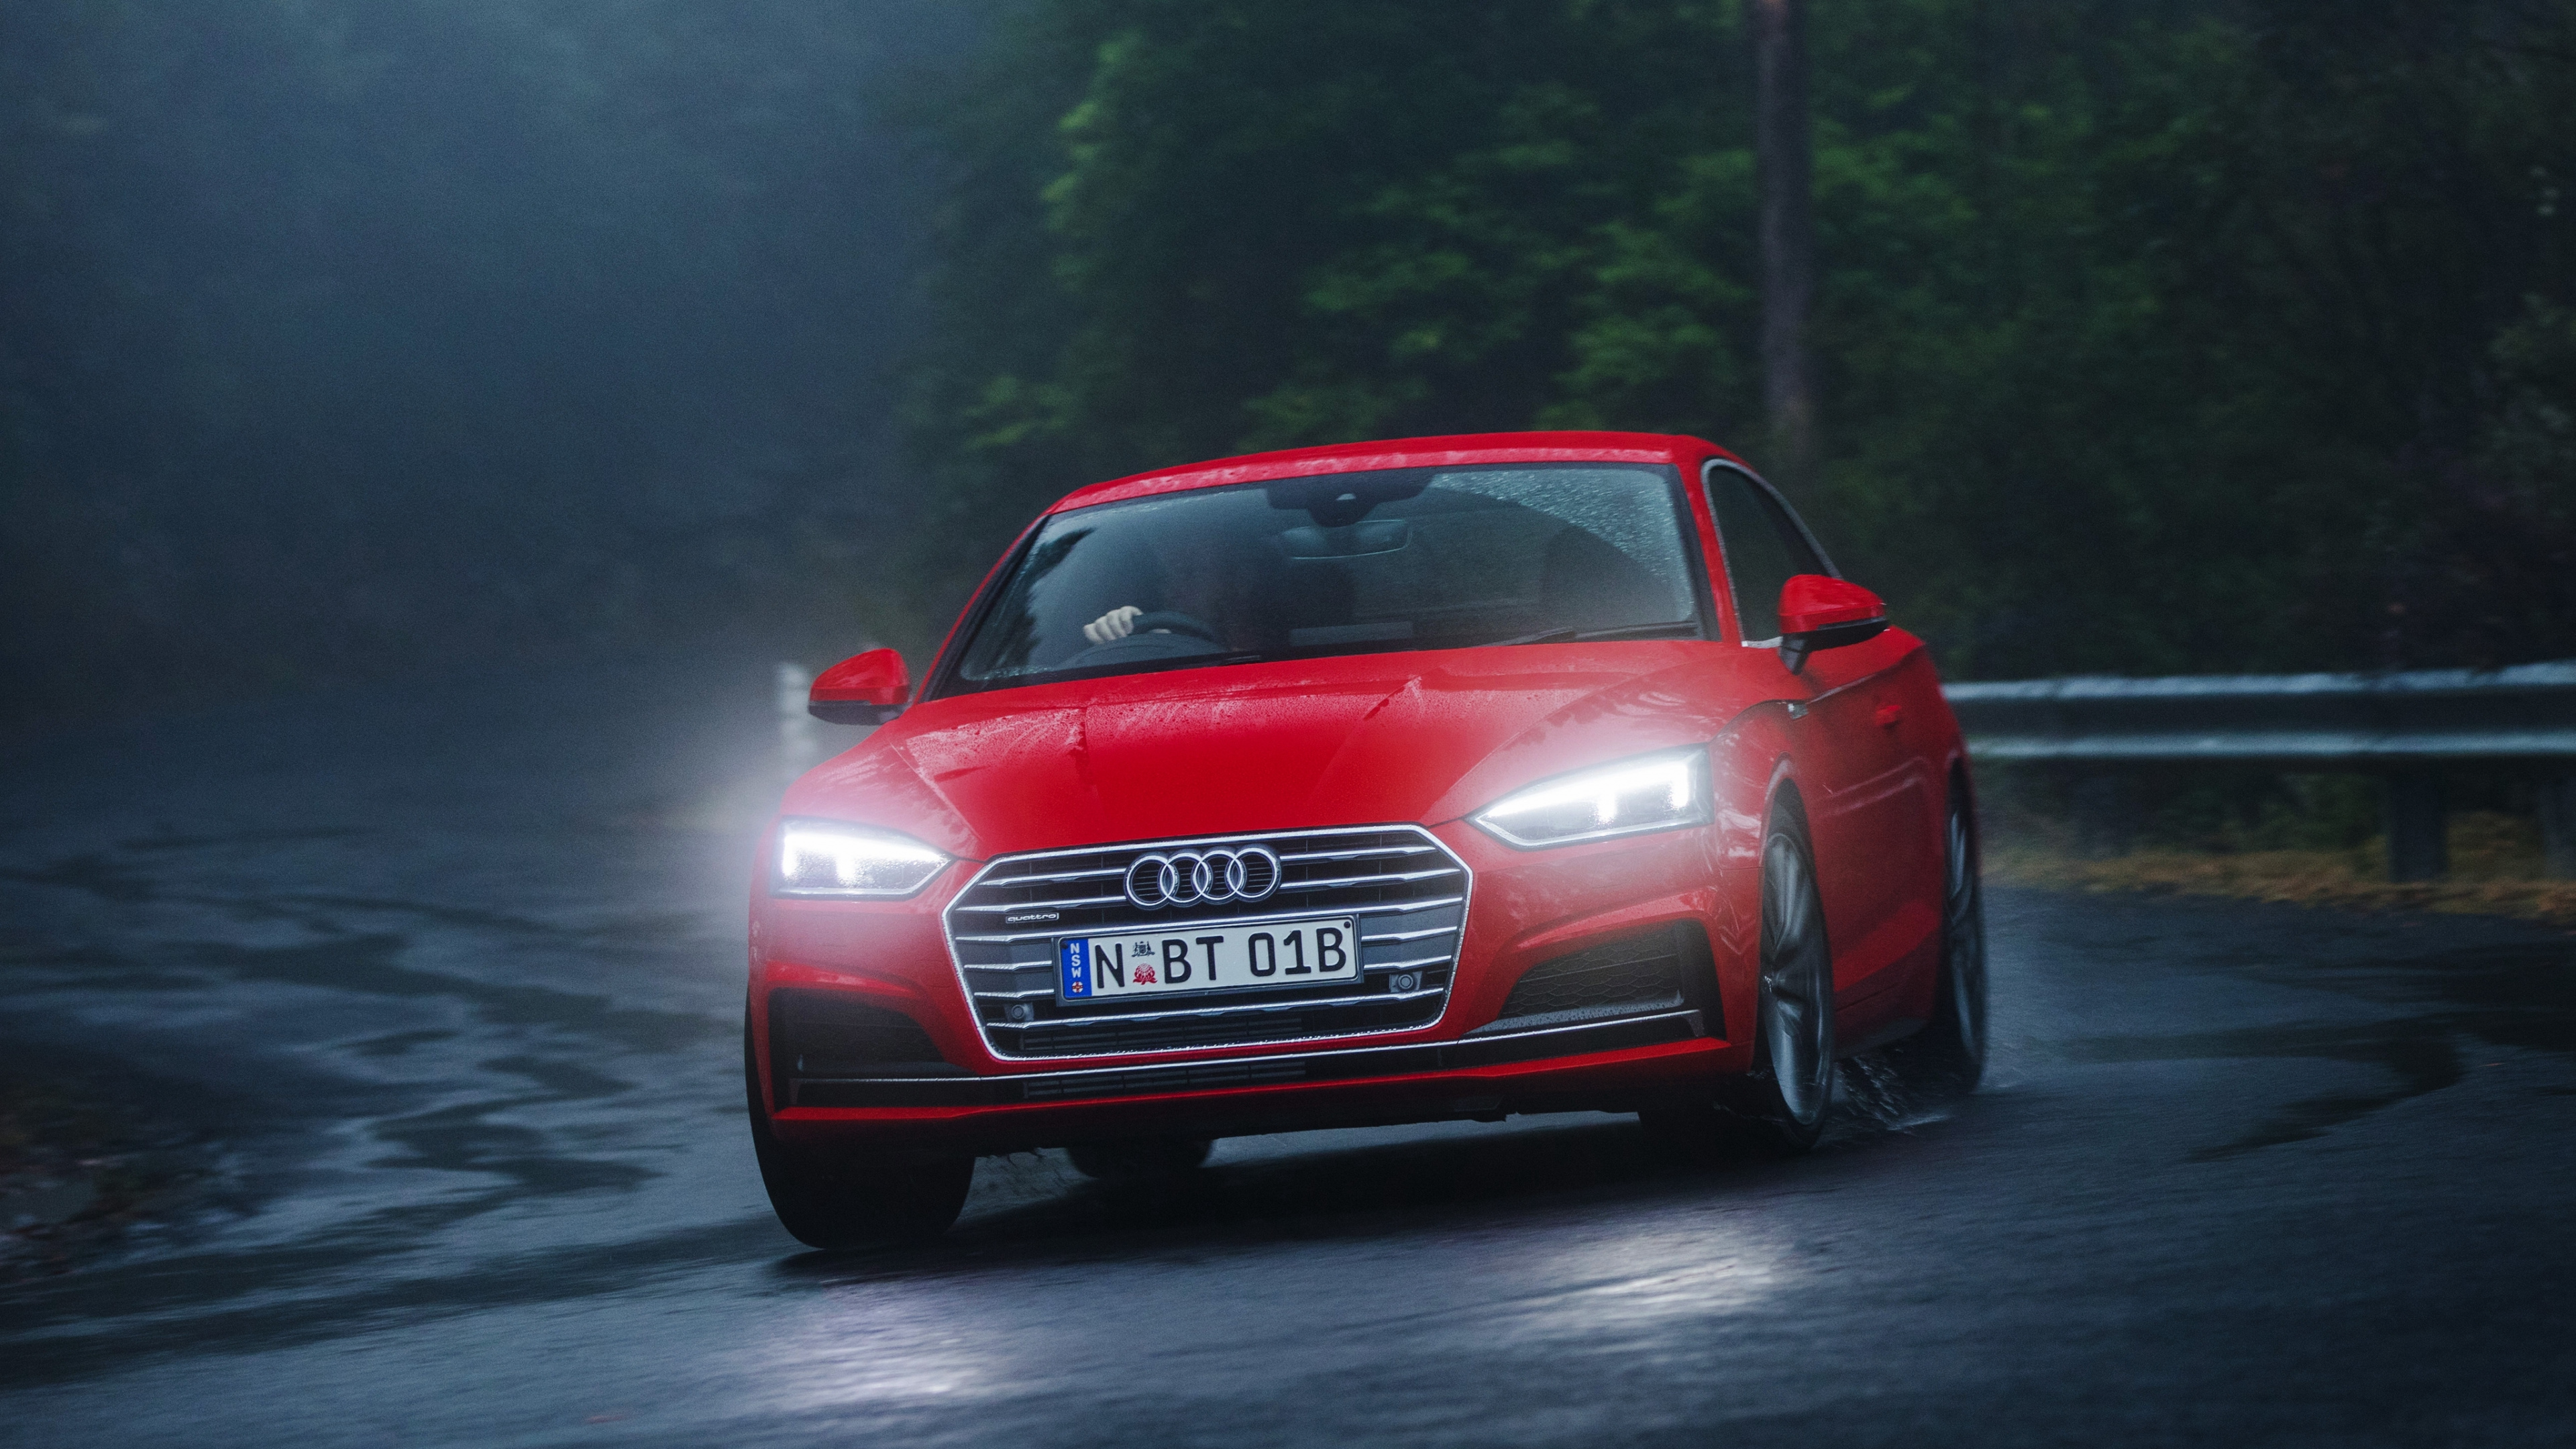 Roter Audi a 4 Unterwegs. Wallpaper in 3840x2160 Resolution